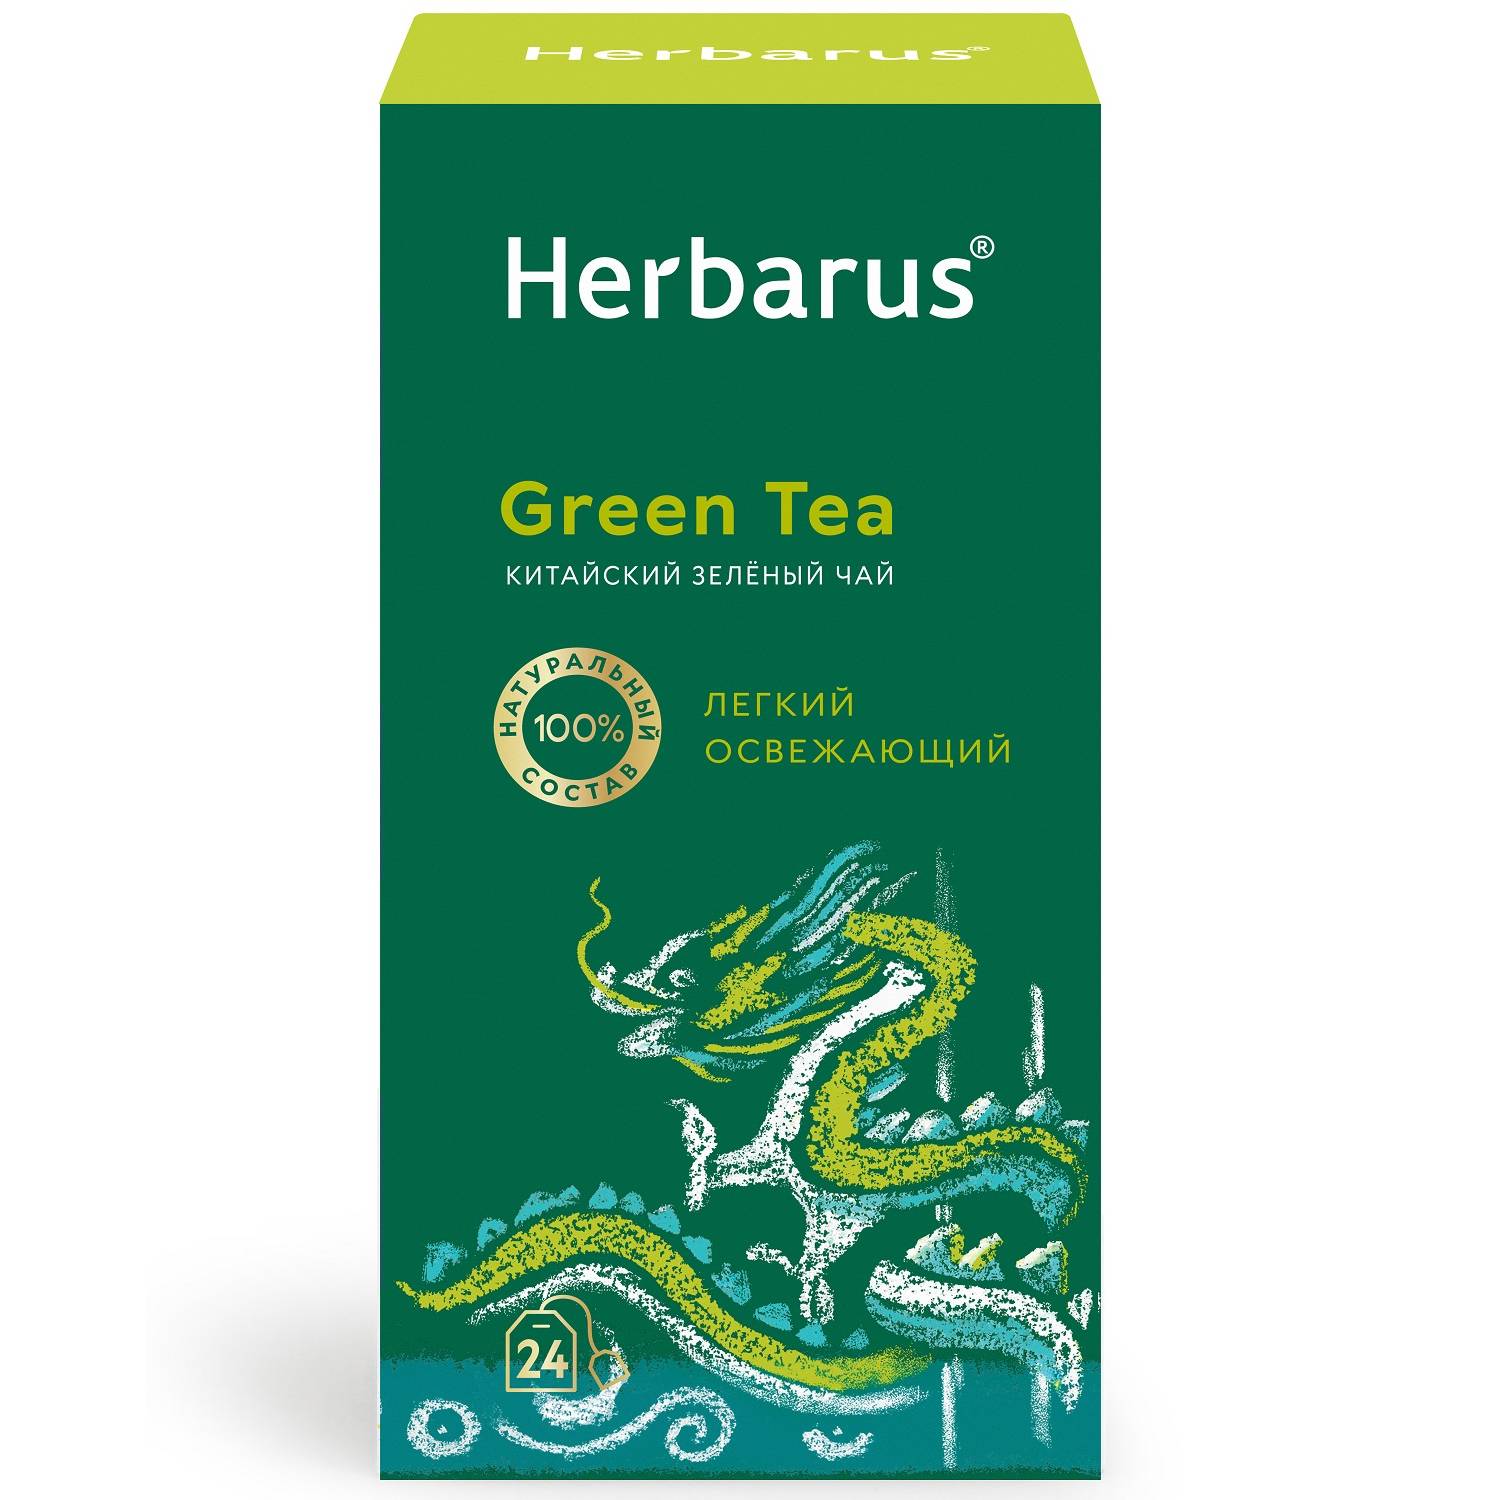 Herbarus Чай зеленый китайский Green Tea, 24 пакетика х 2 г (Herbarus, Классический чай) herbarus чай улун с добавками нежный гармоничный 24 х 2 г herbarus чай с добавками